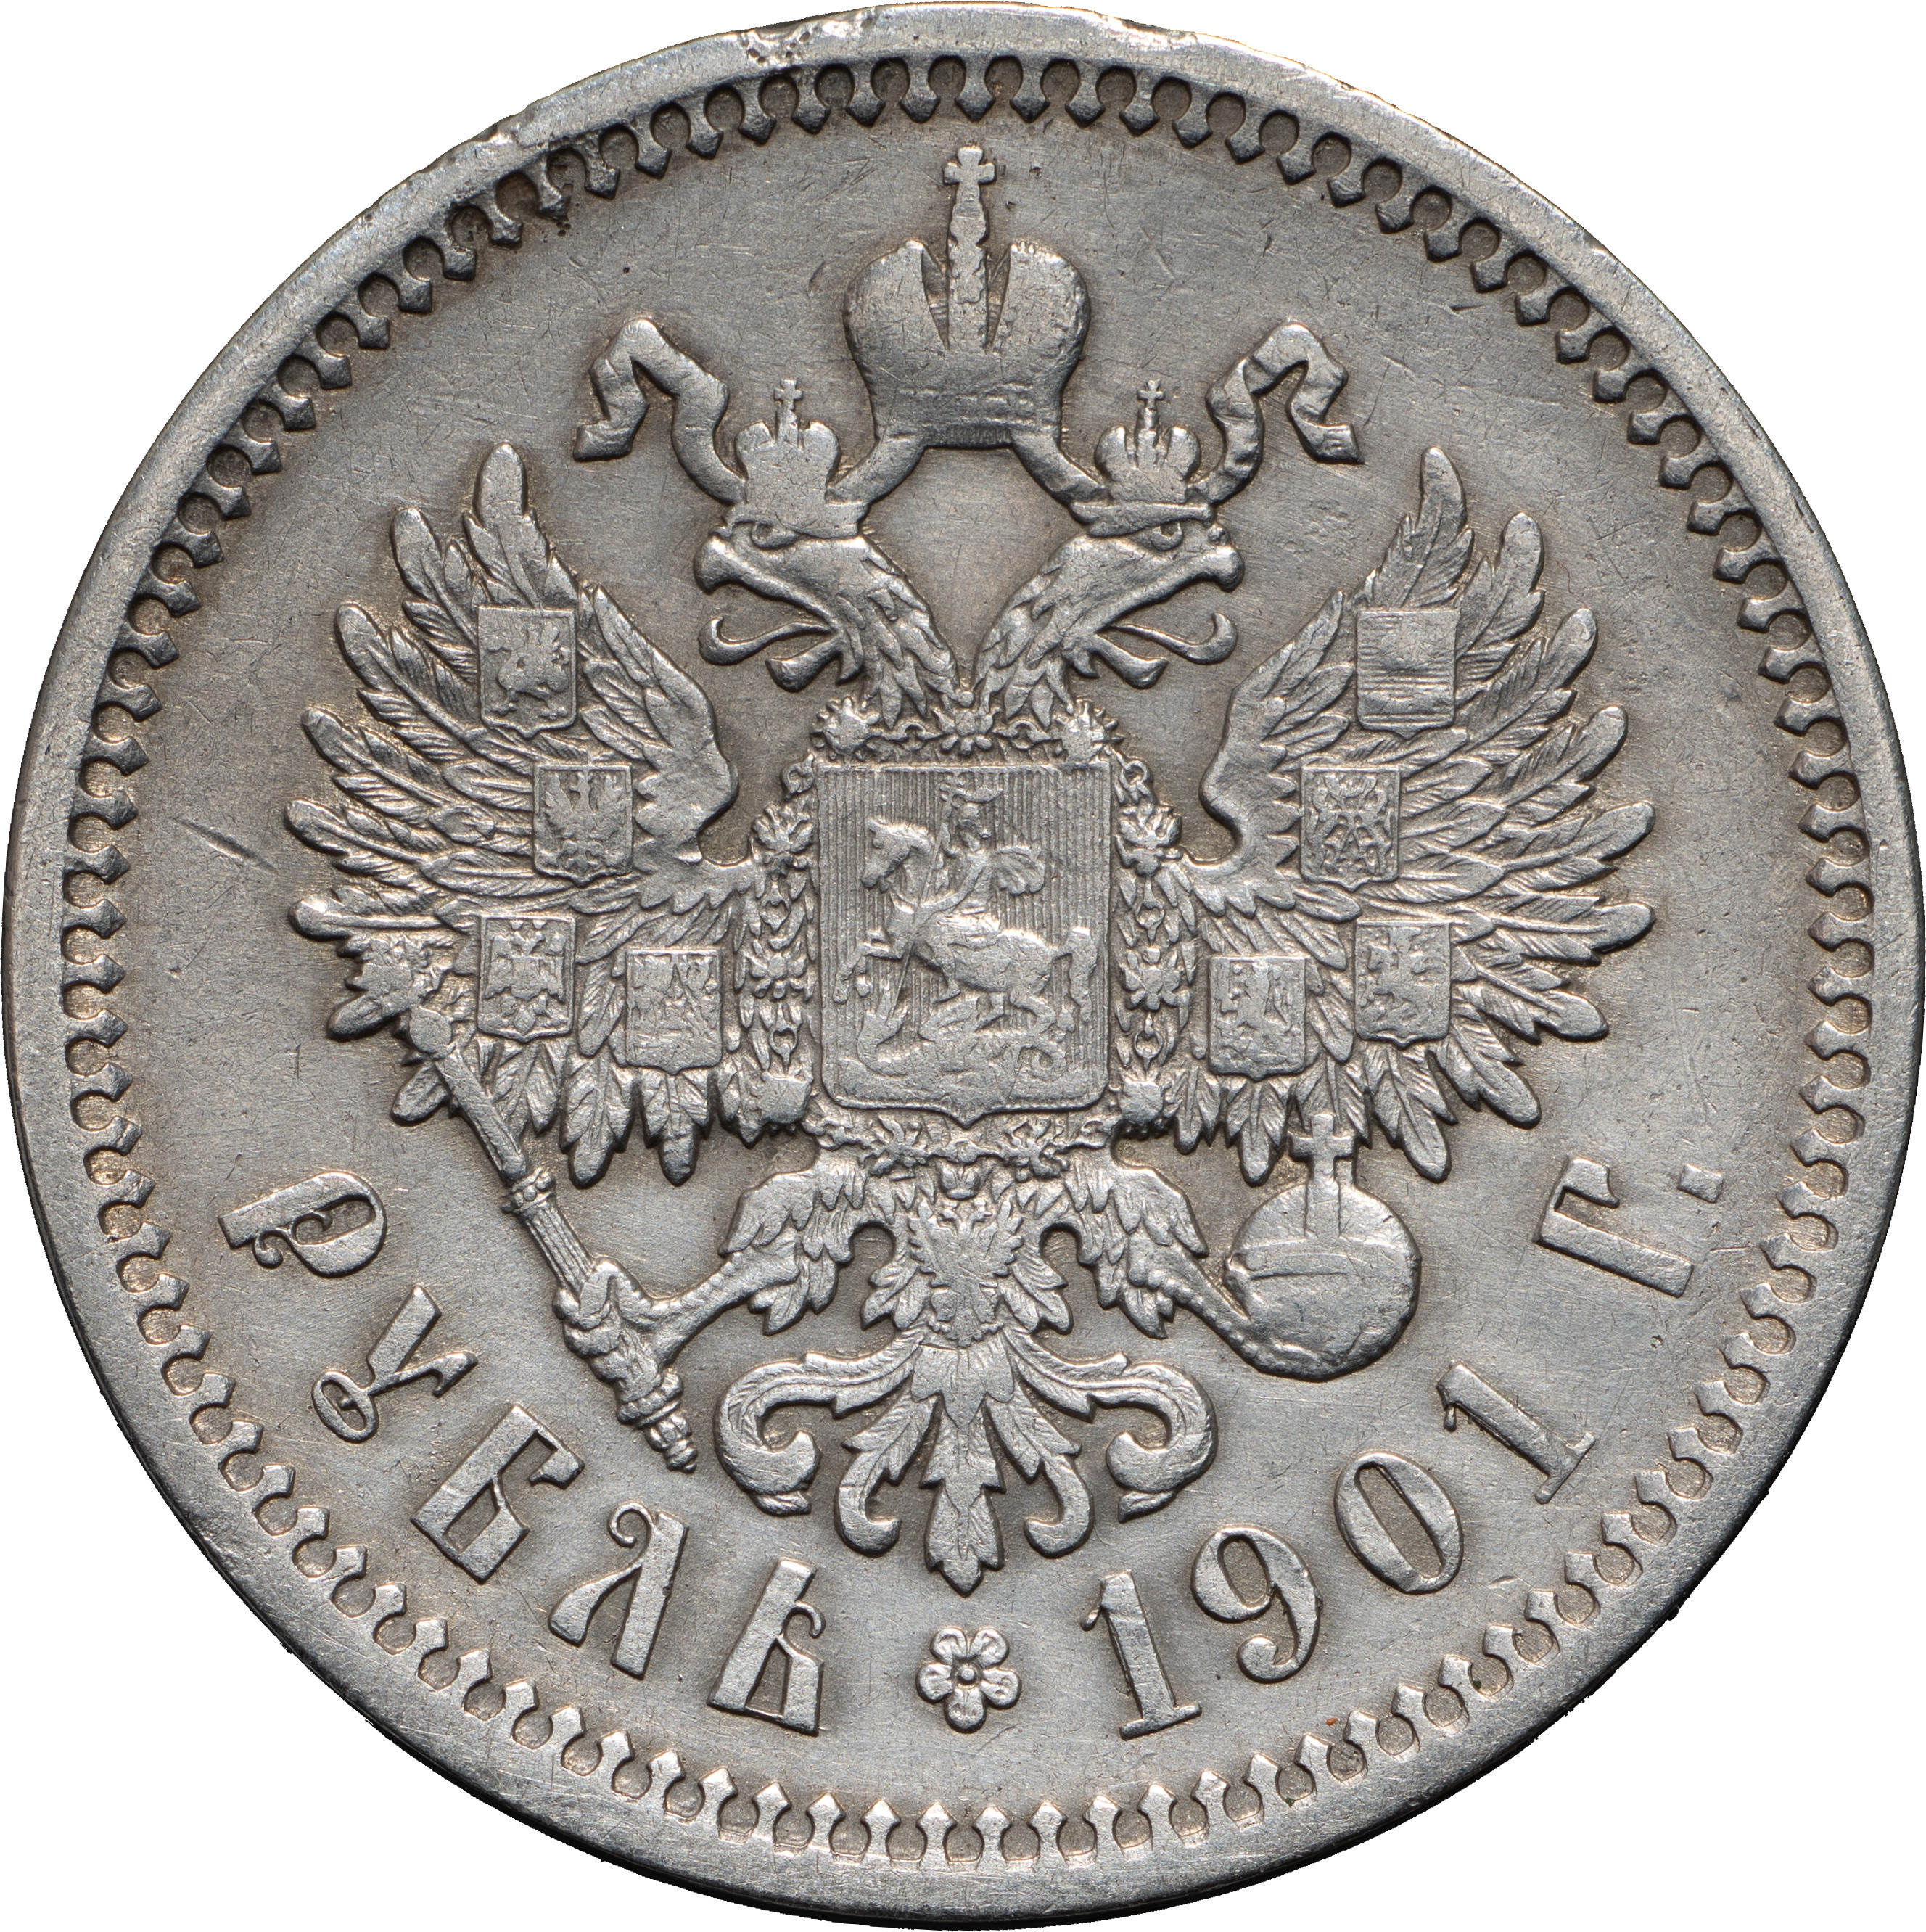 1 рубль 1901 года